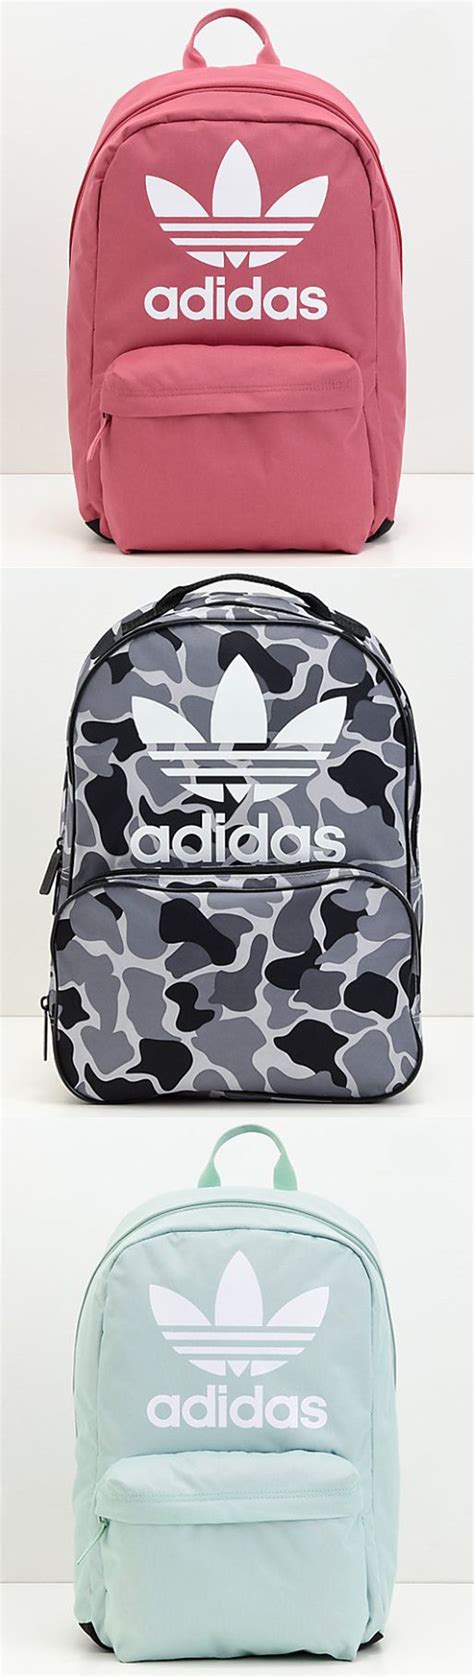 Adidas Backpacks Adidas Backpack Adidas Bags Backpack Purse Mochila